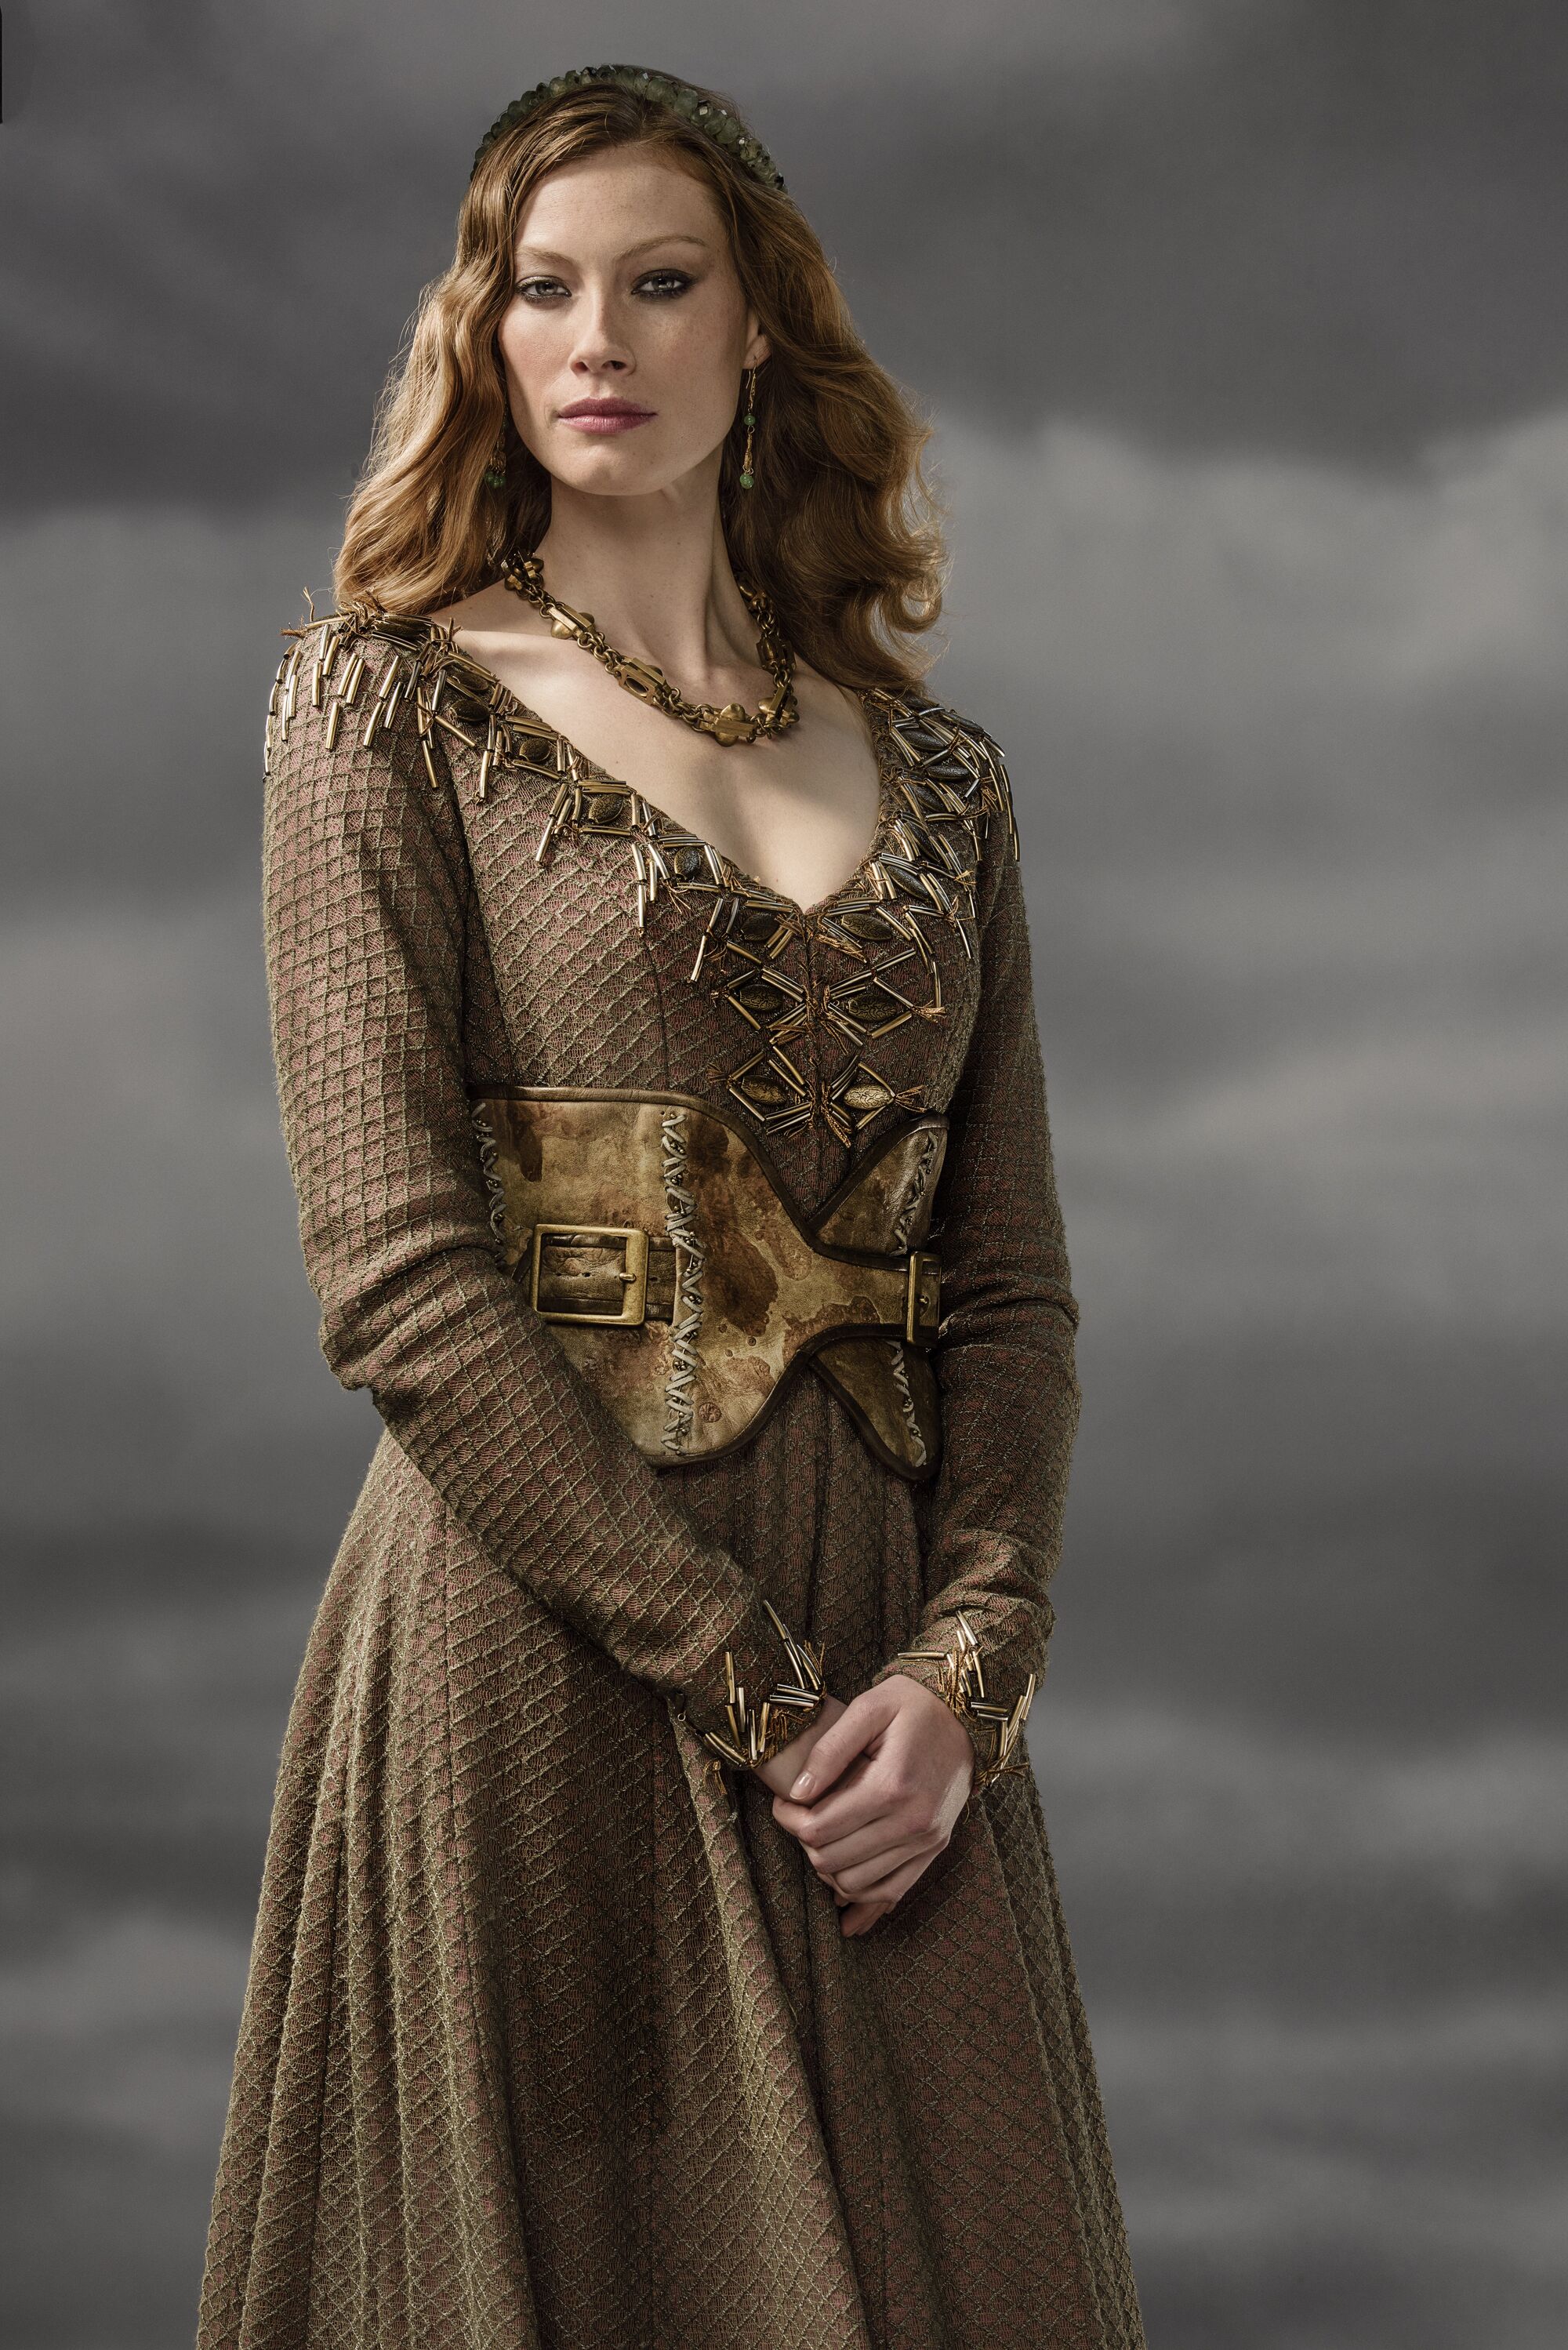 Image - Alyssa Sutherland as Arwaya Kenning.jpg | Game of Thrones fanon